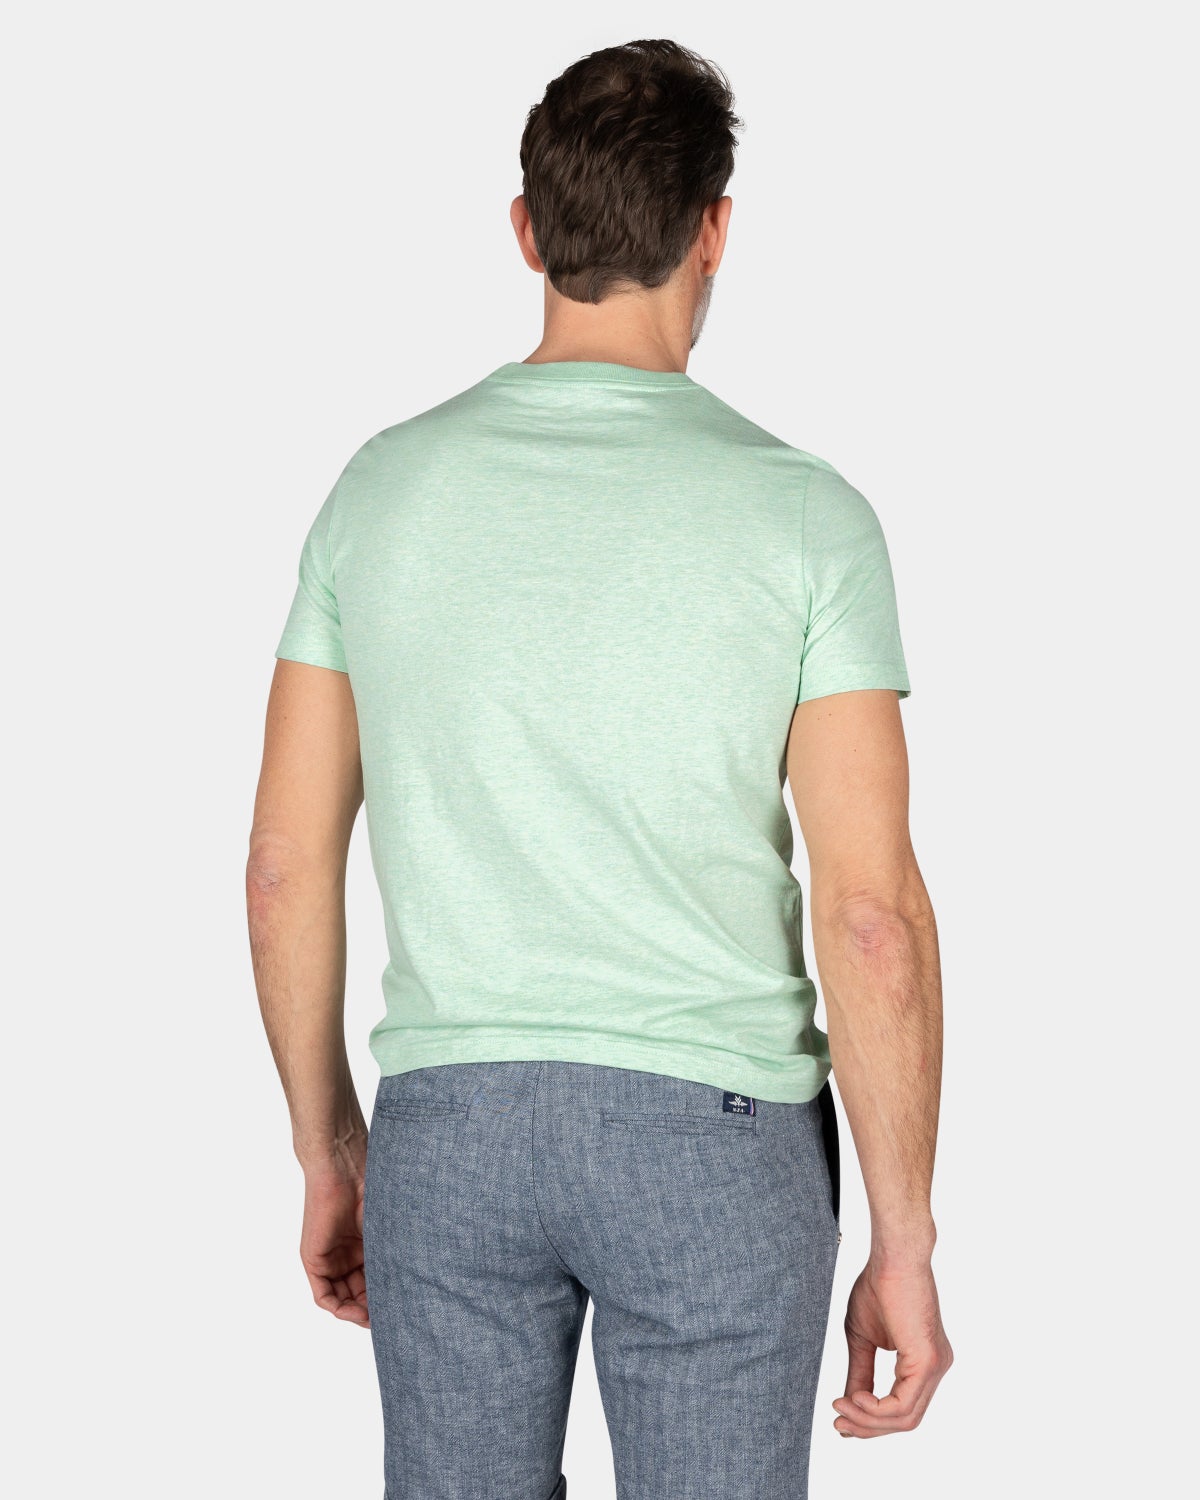 Camiseta lisa de algodón - Teal Green